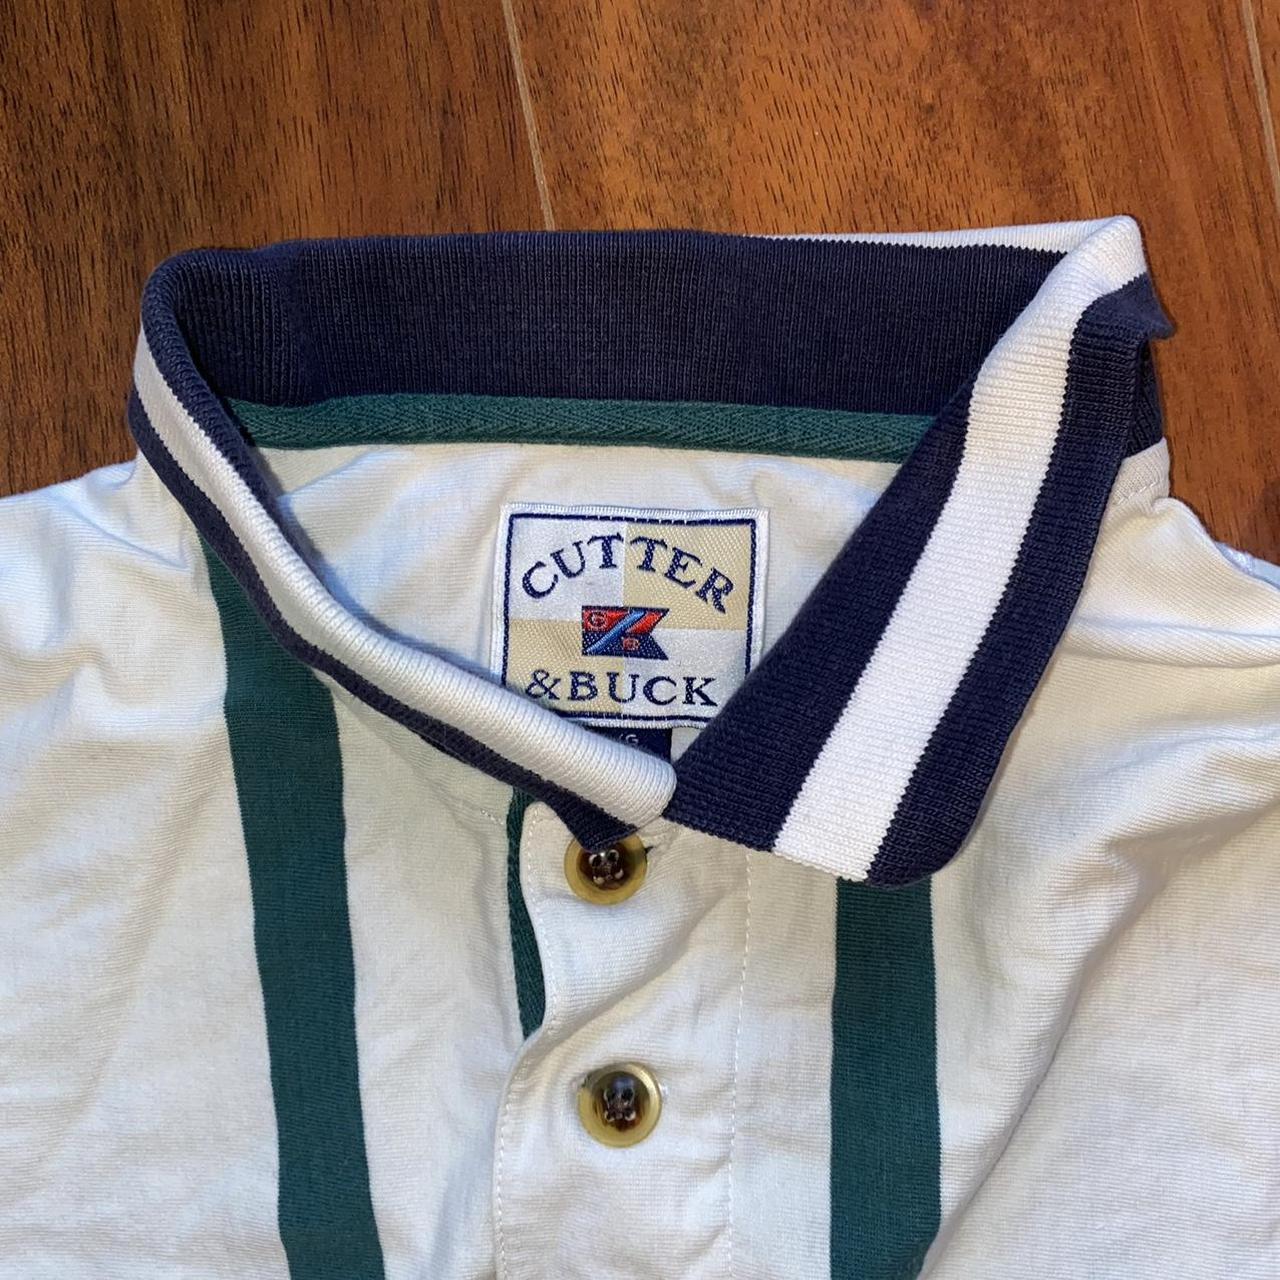 Cutter & Buck Men's White Polo-shirts (3)